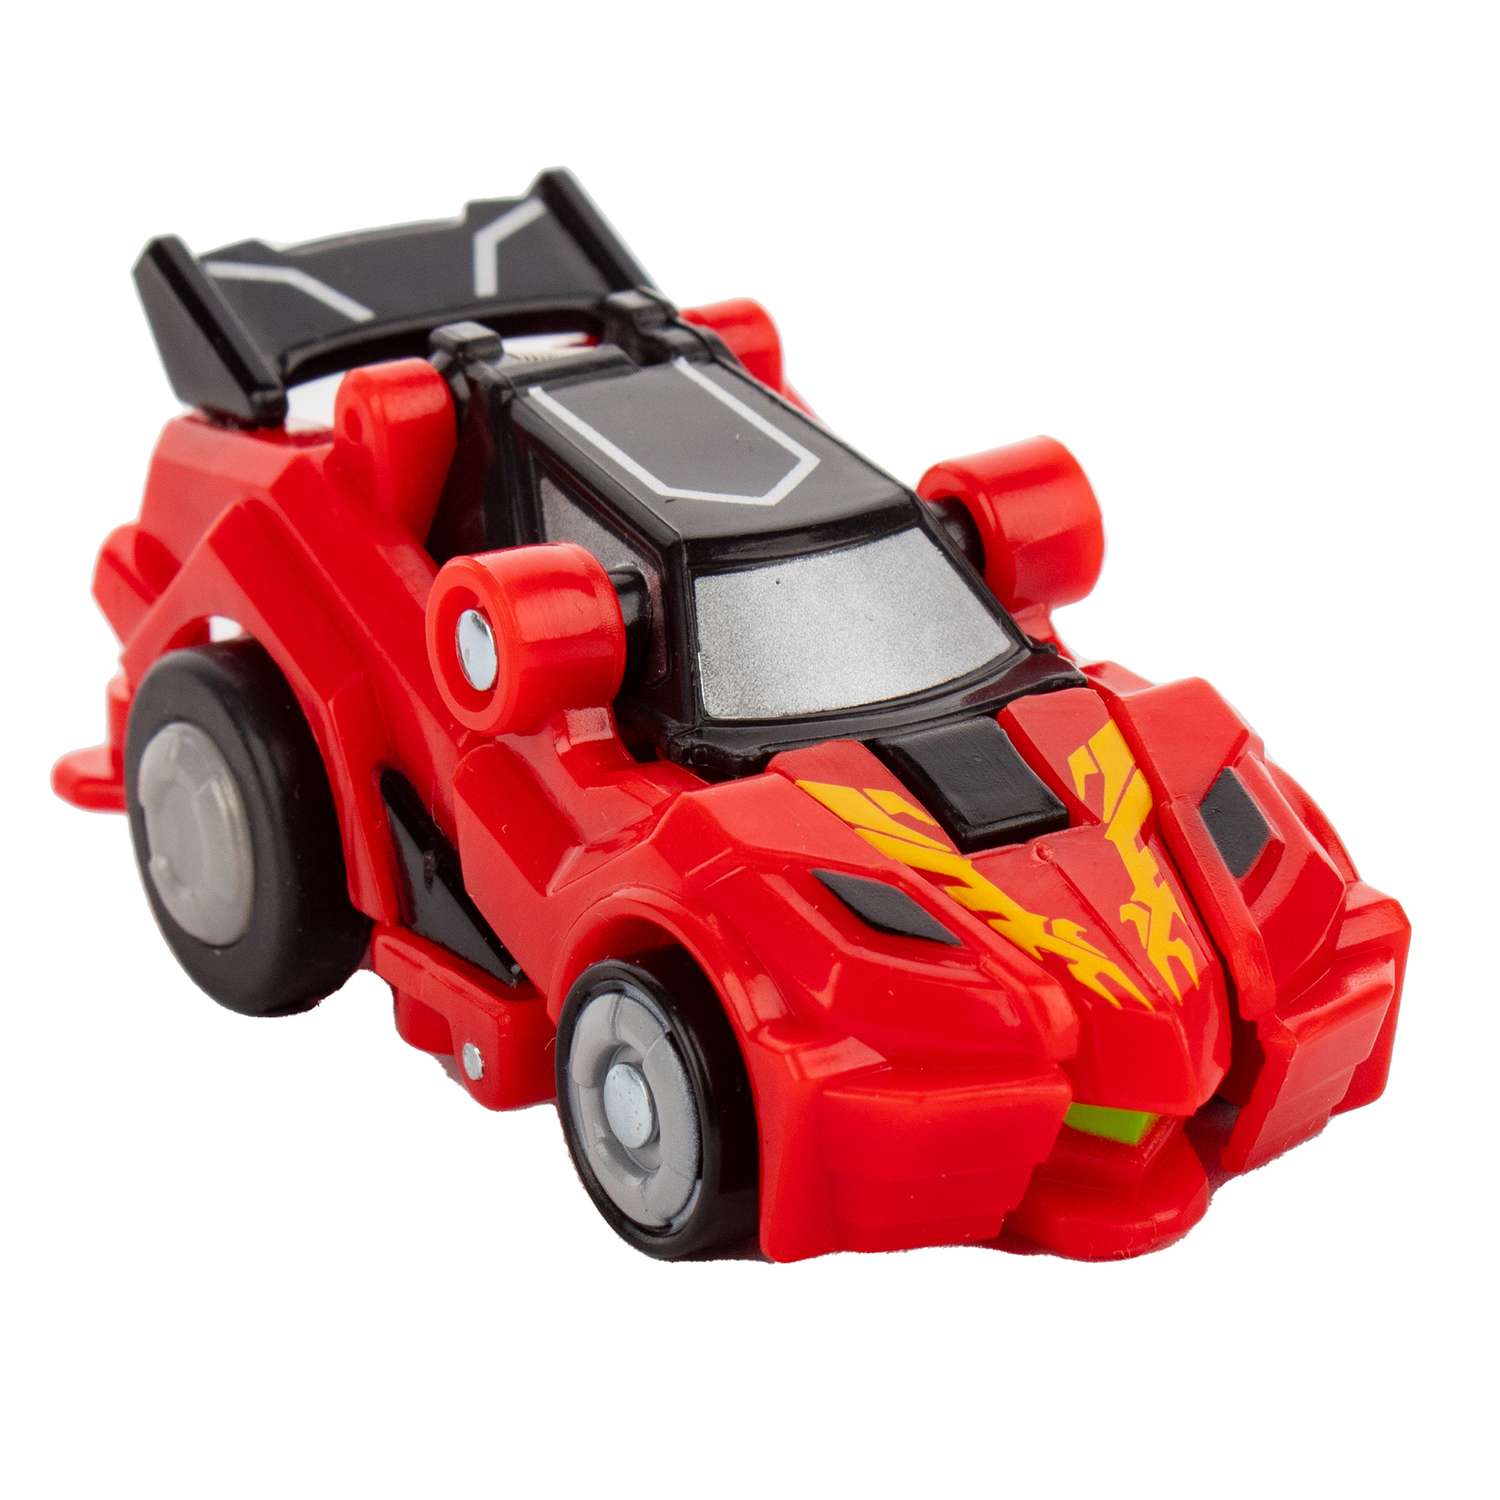 Машинка KiddieDrive Трансформер Blaze Rider 106001 - фото 6